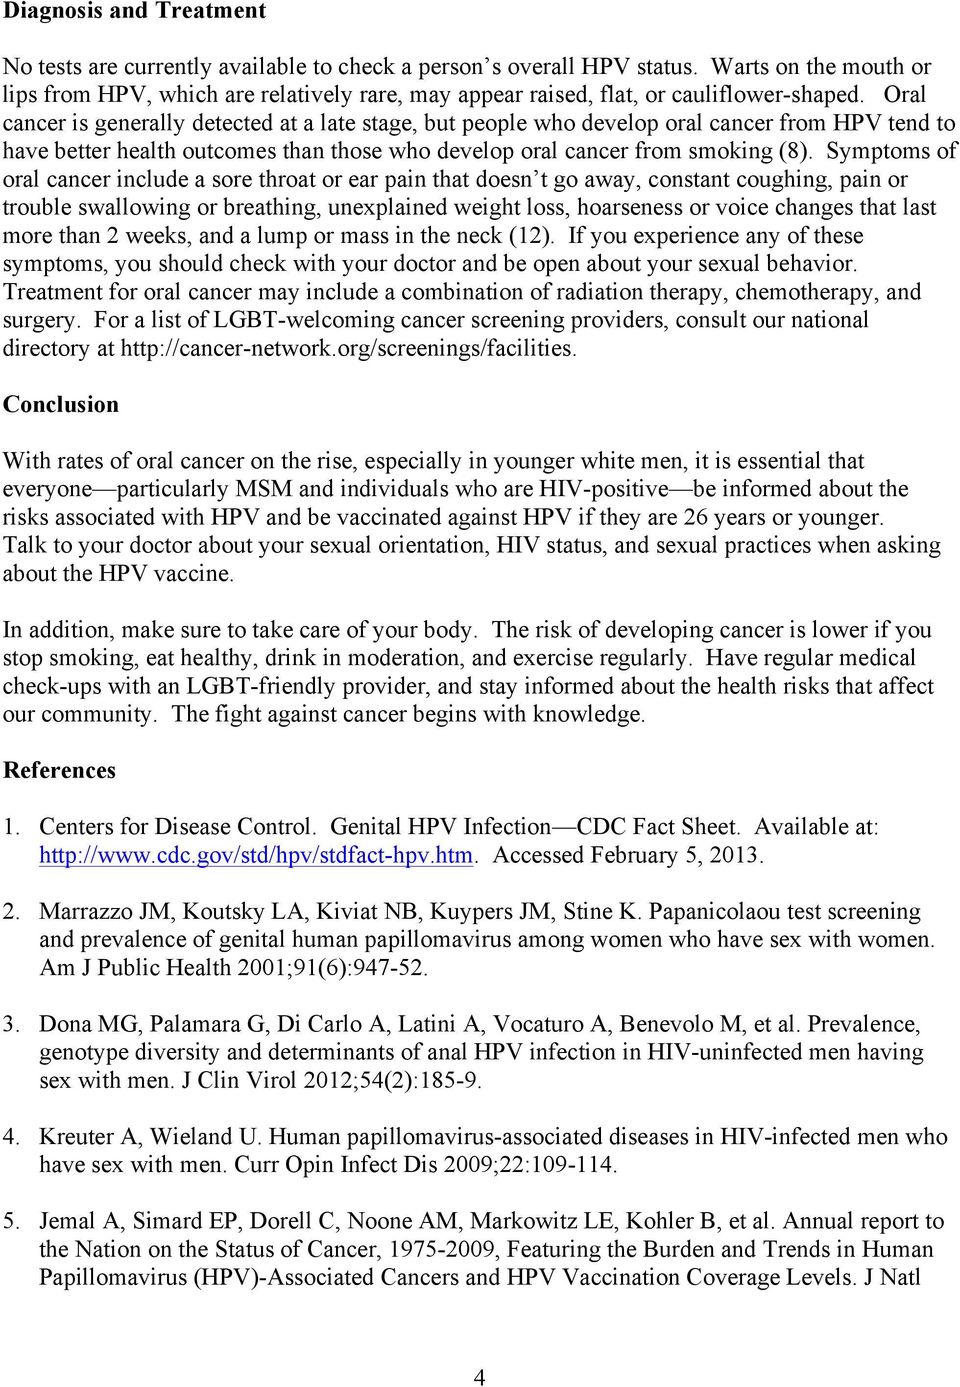 Genital hpv cdc fact sheet - Genital hpv cdc fact sheet